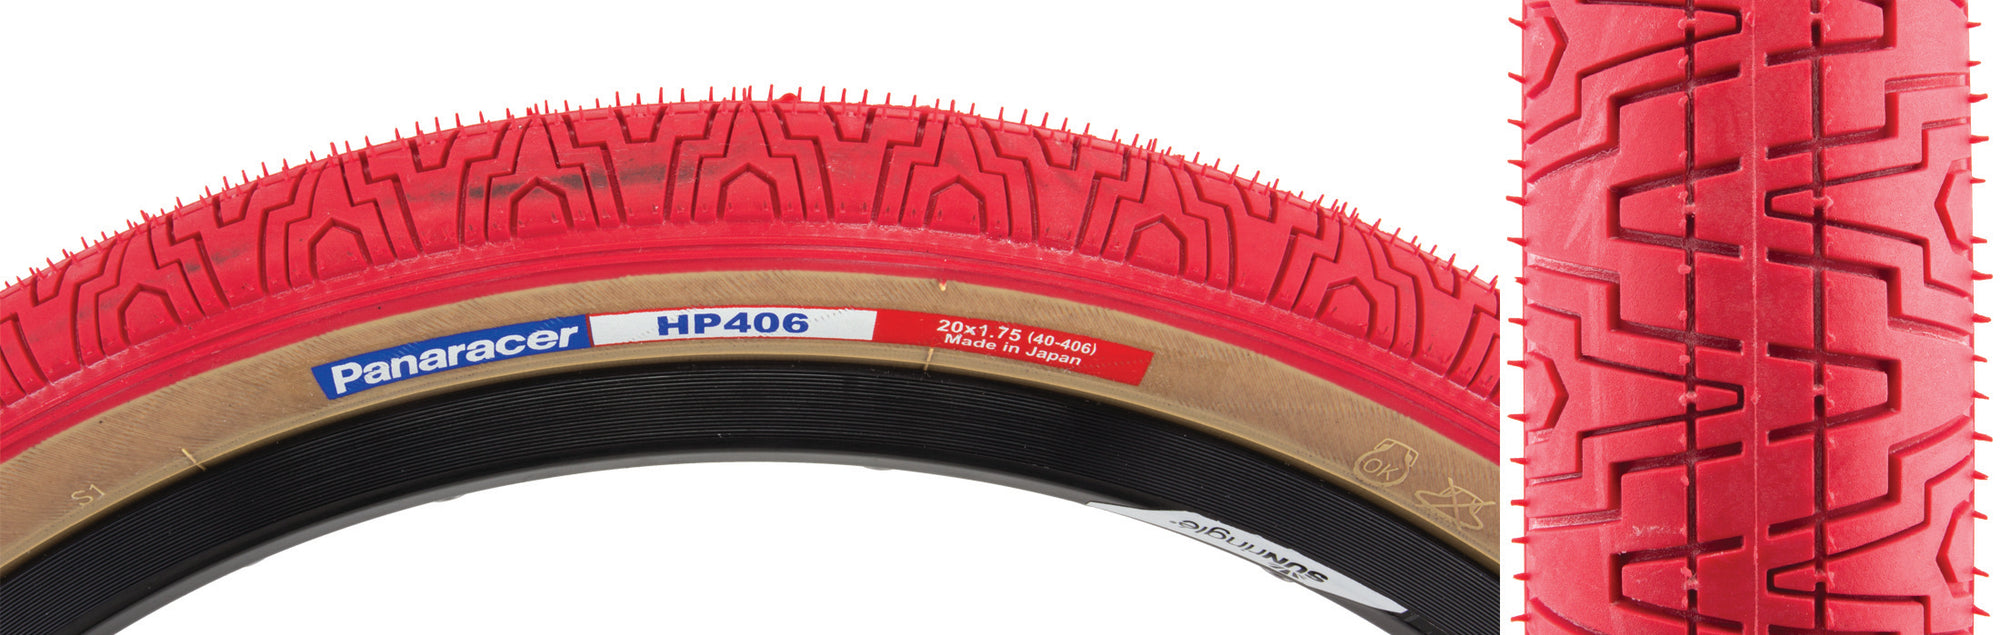 20x1.75 Panaracer HP406 Freestyle BMX tire - Red w/ Skinwall